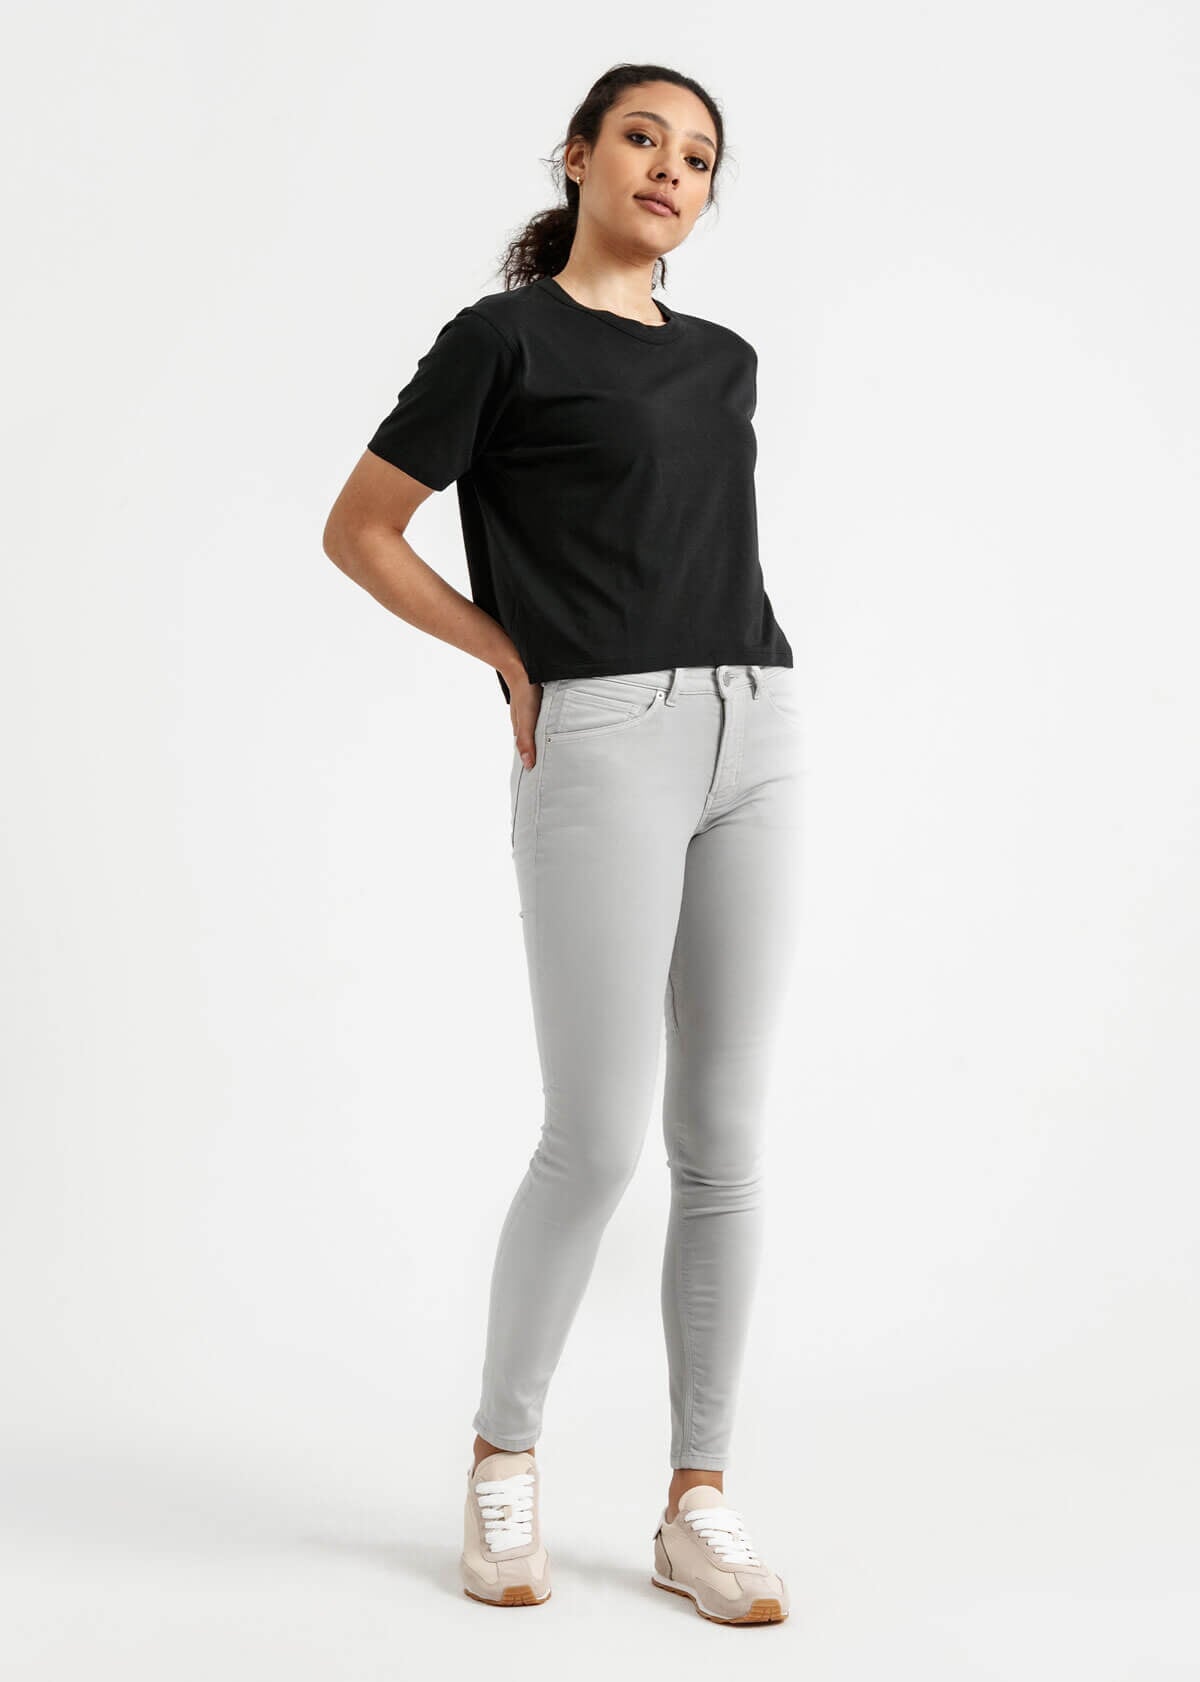 Women's black lightweight soft crop tshirt full body